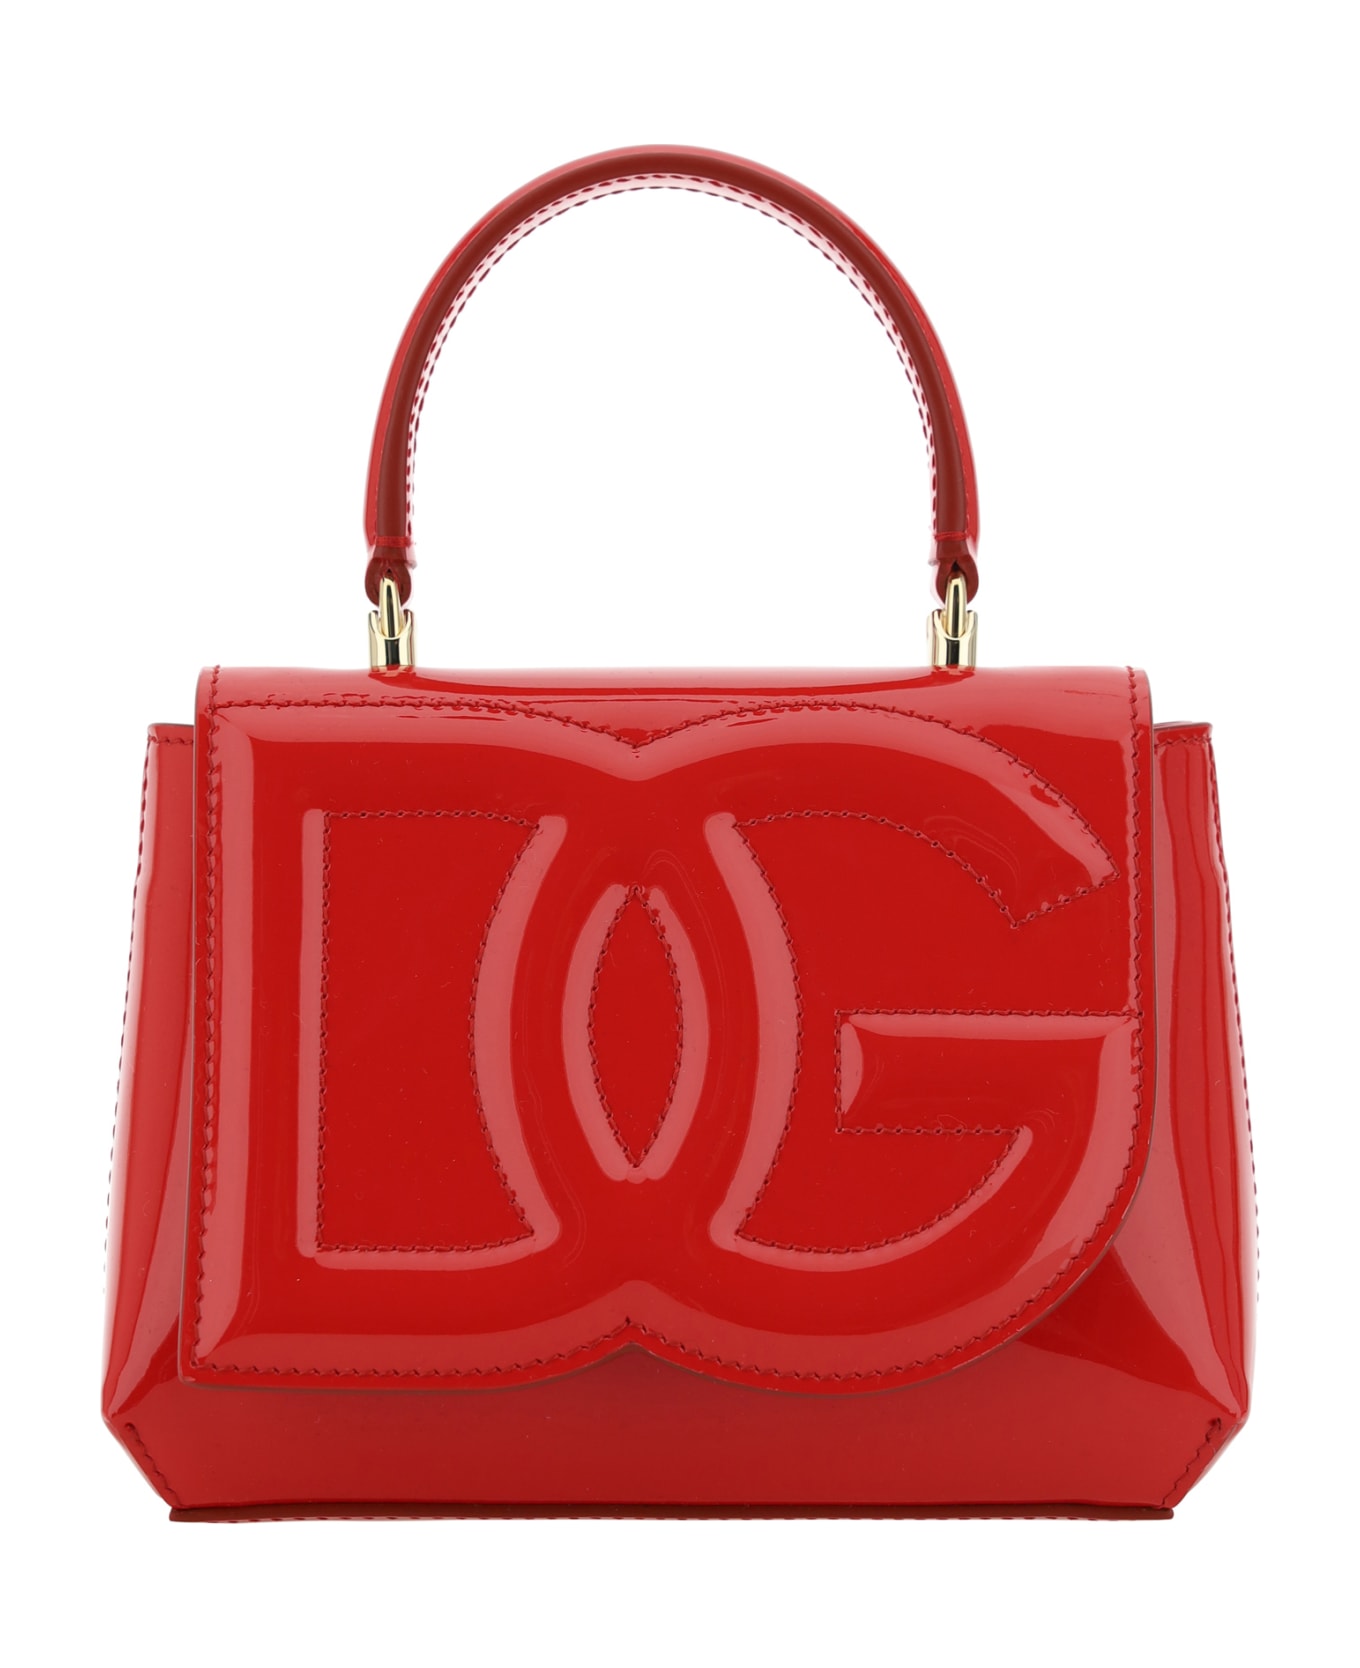 Dolce & Gabbana 'dg' Handbag - Rosso 2 トートバッグ